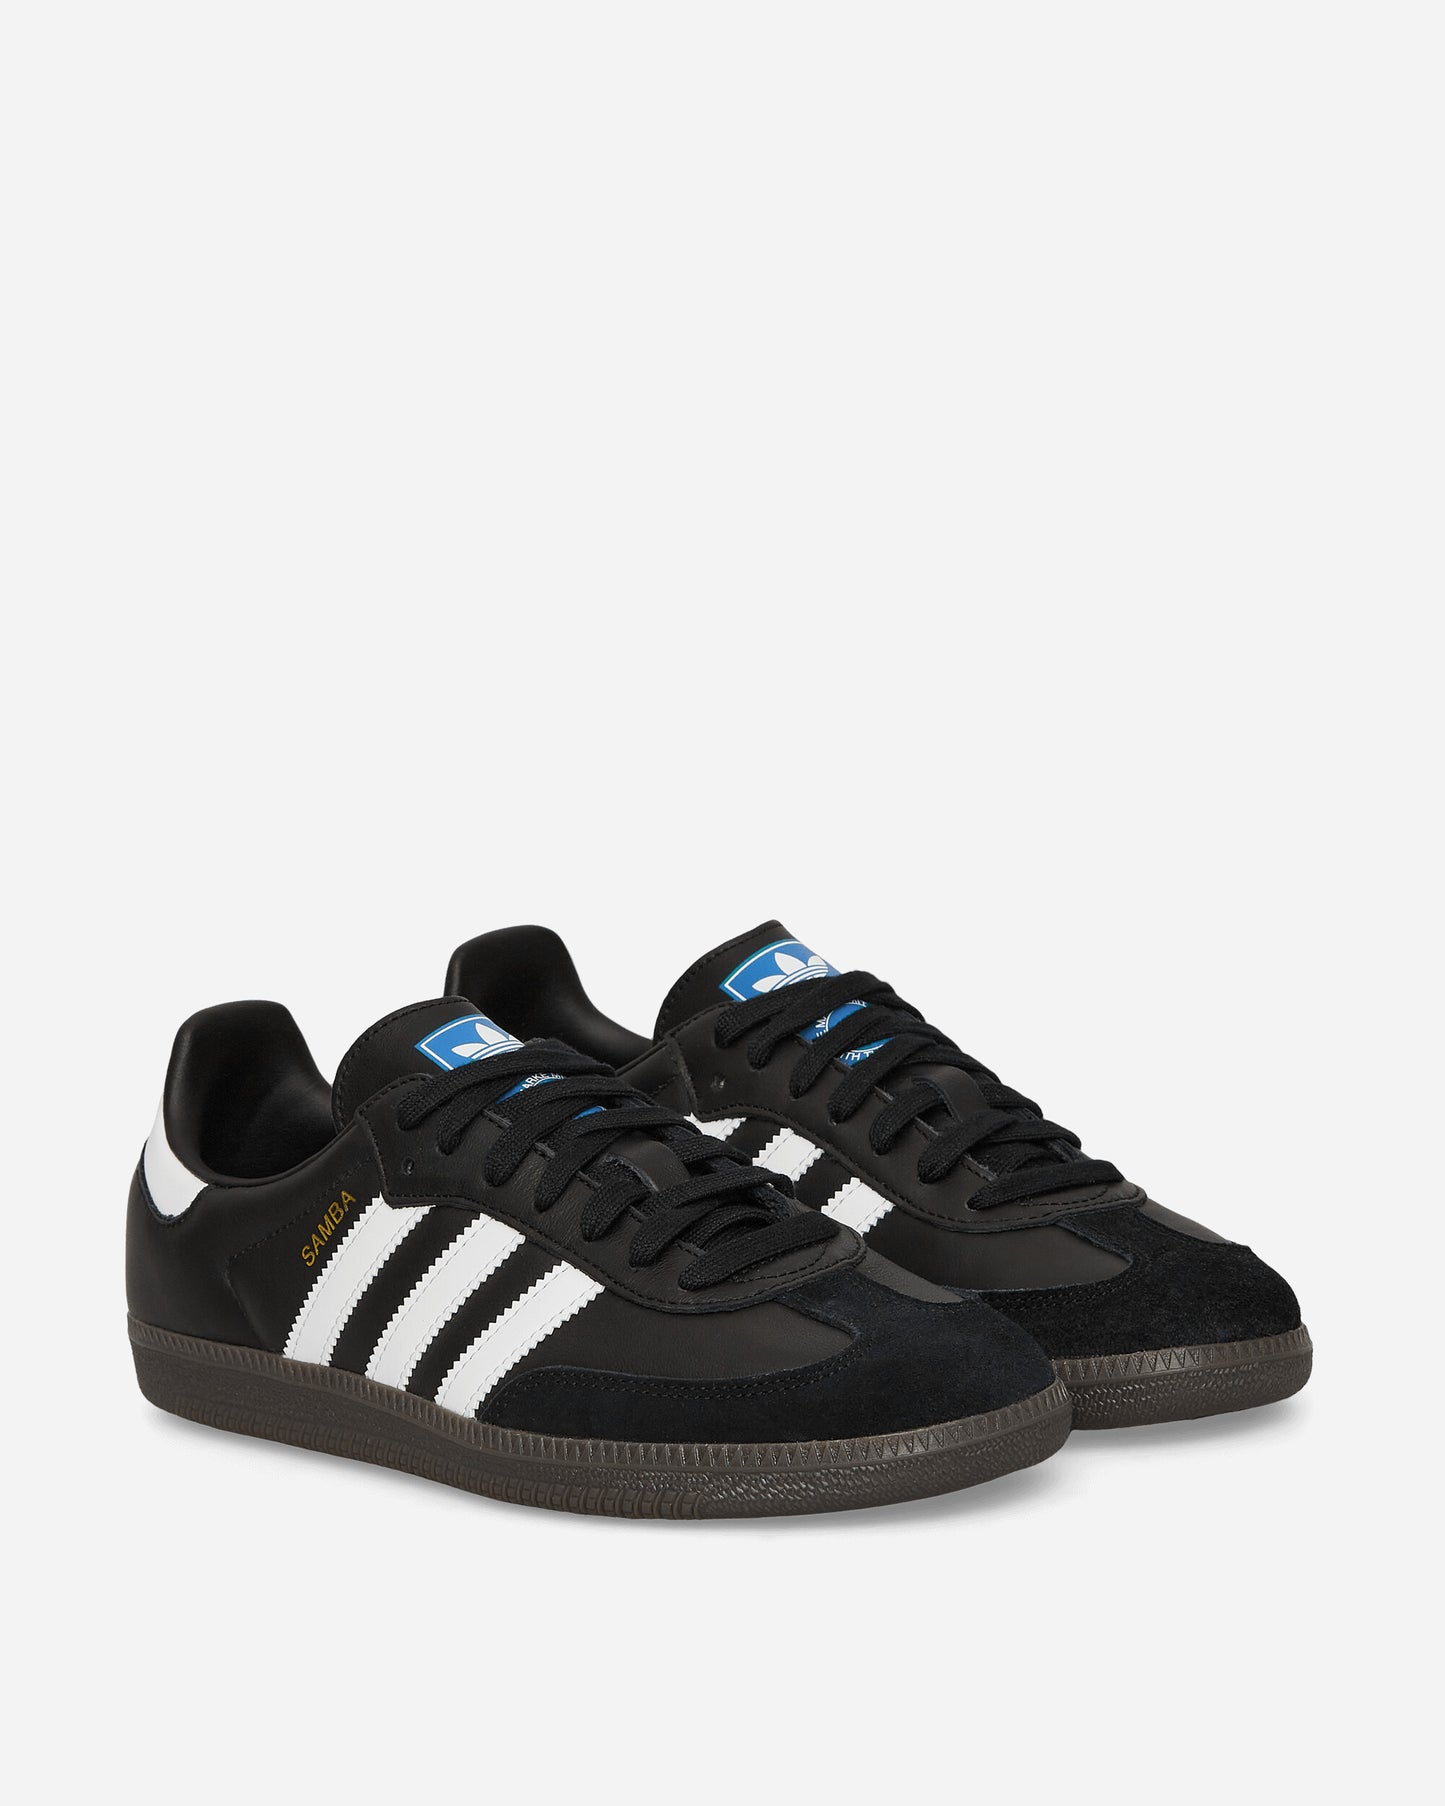 adidas Samba Og Core Black/Ftwr White Sneakers Low B75807